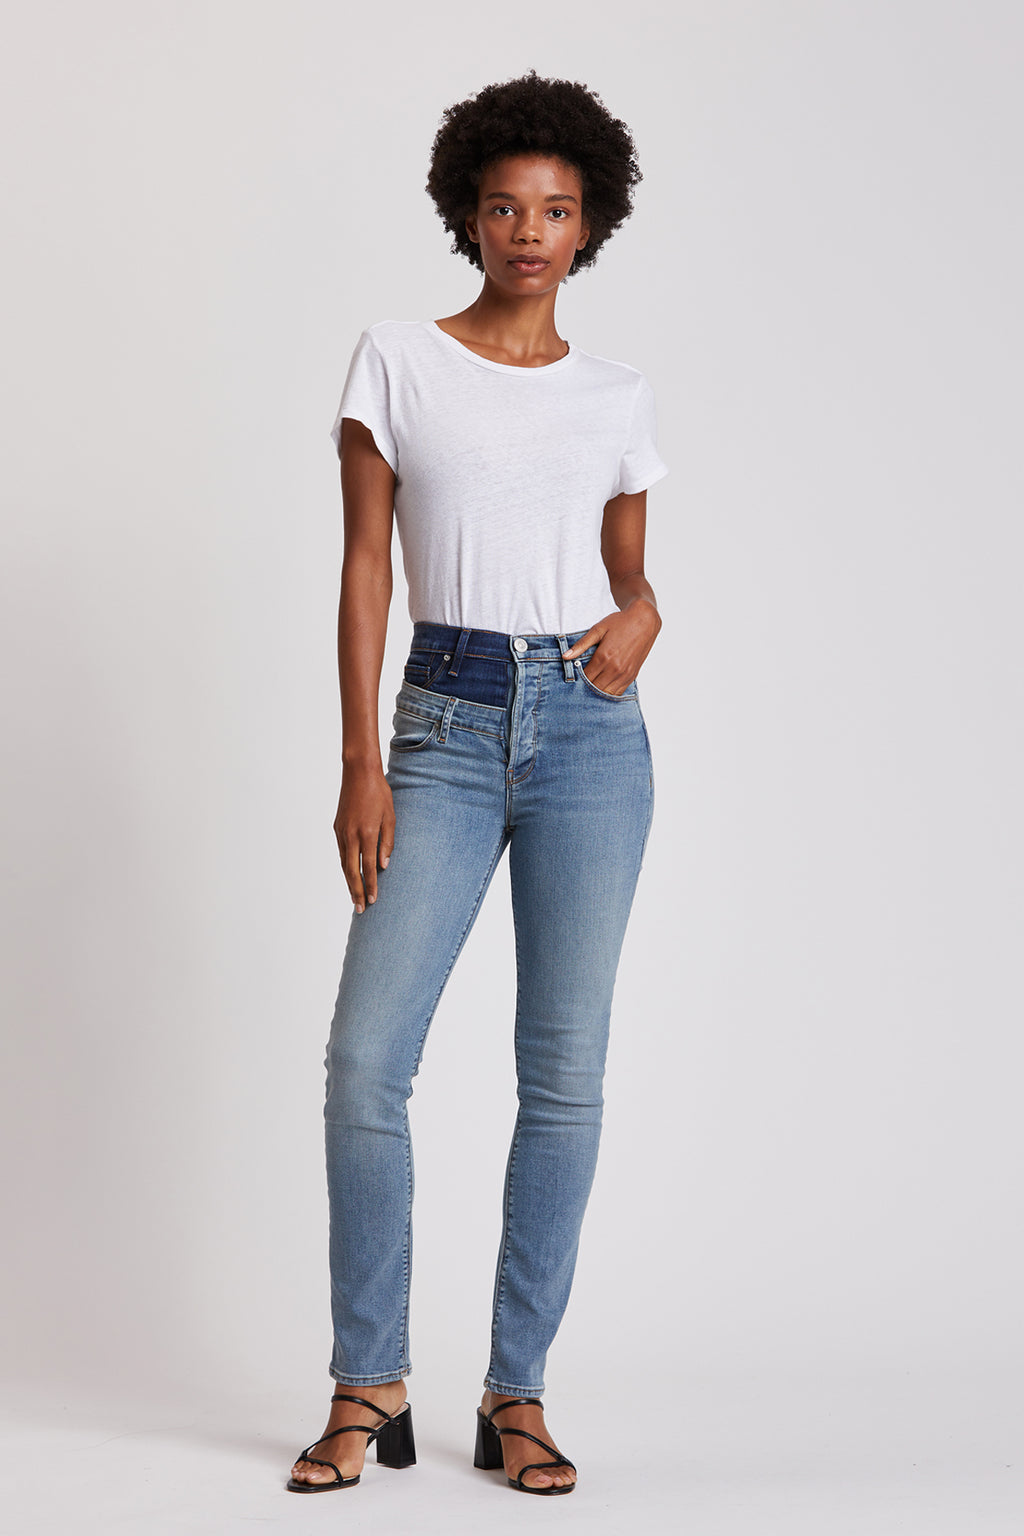 Shop Women's Denim Straight at Hudson Jeans | Hudson Jeans